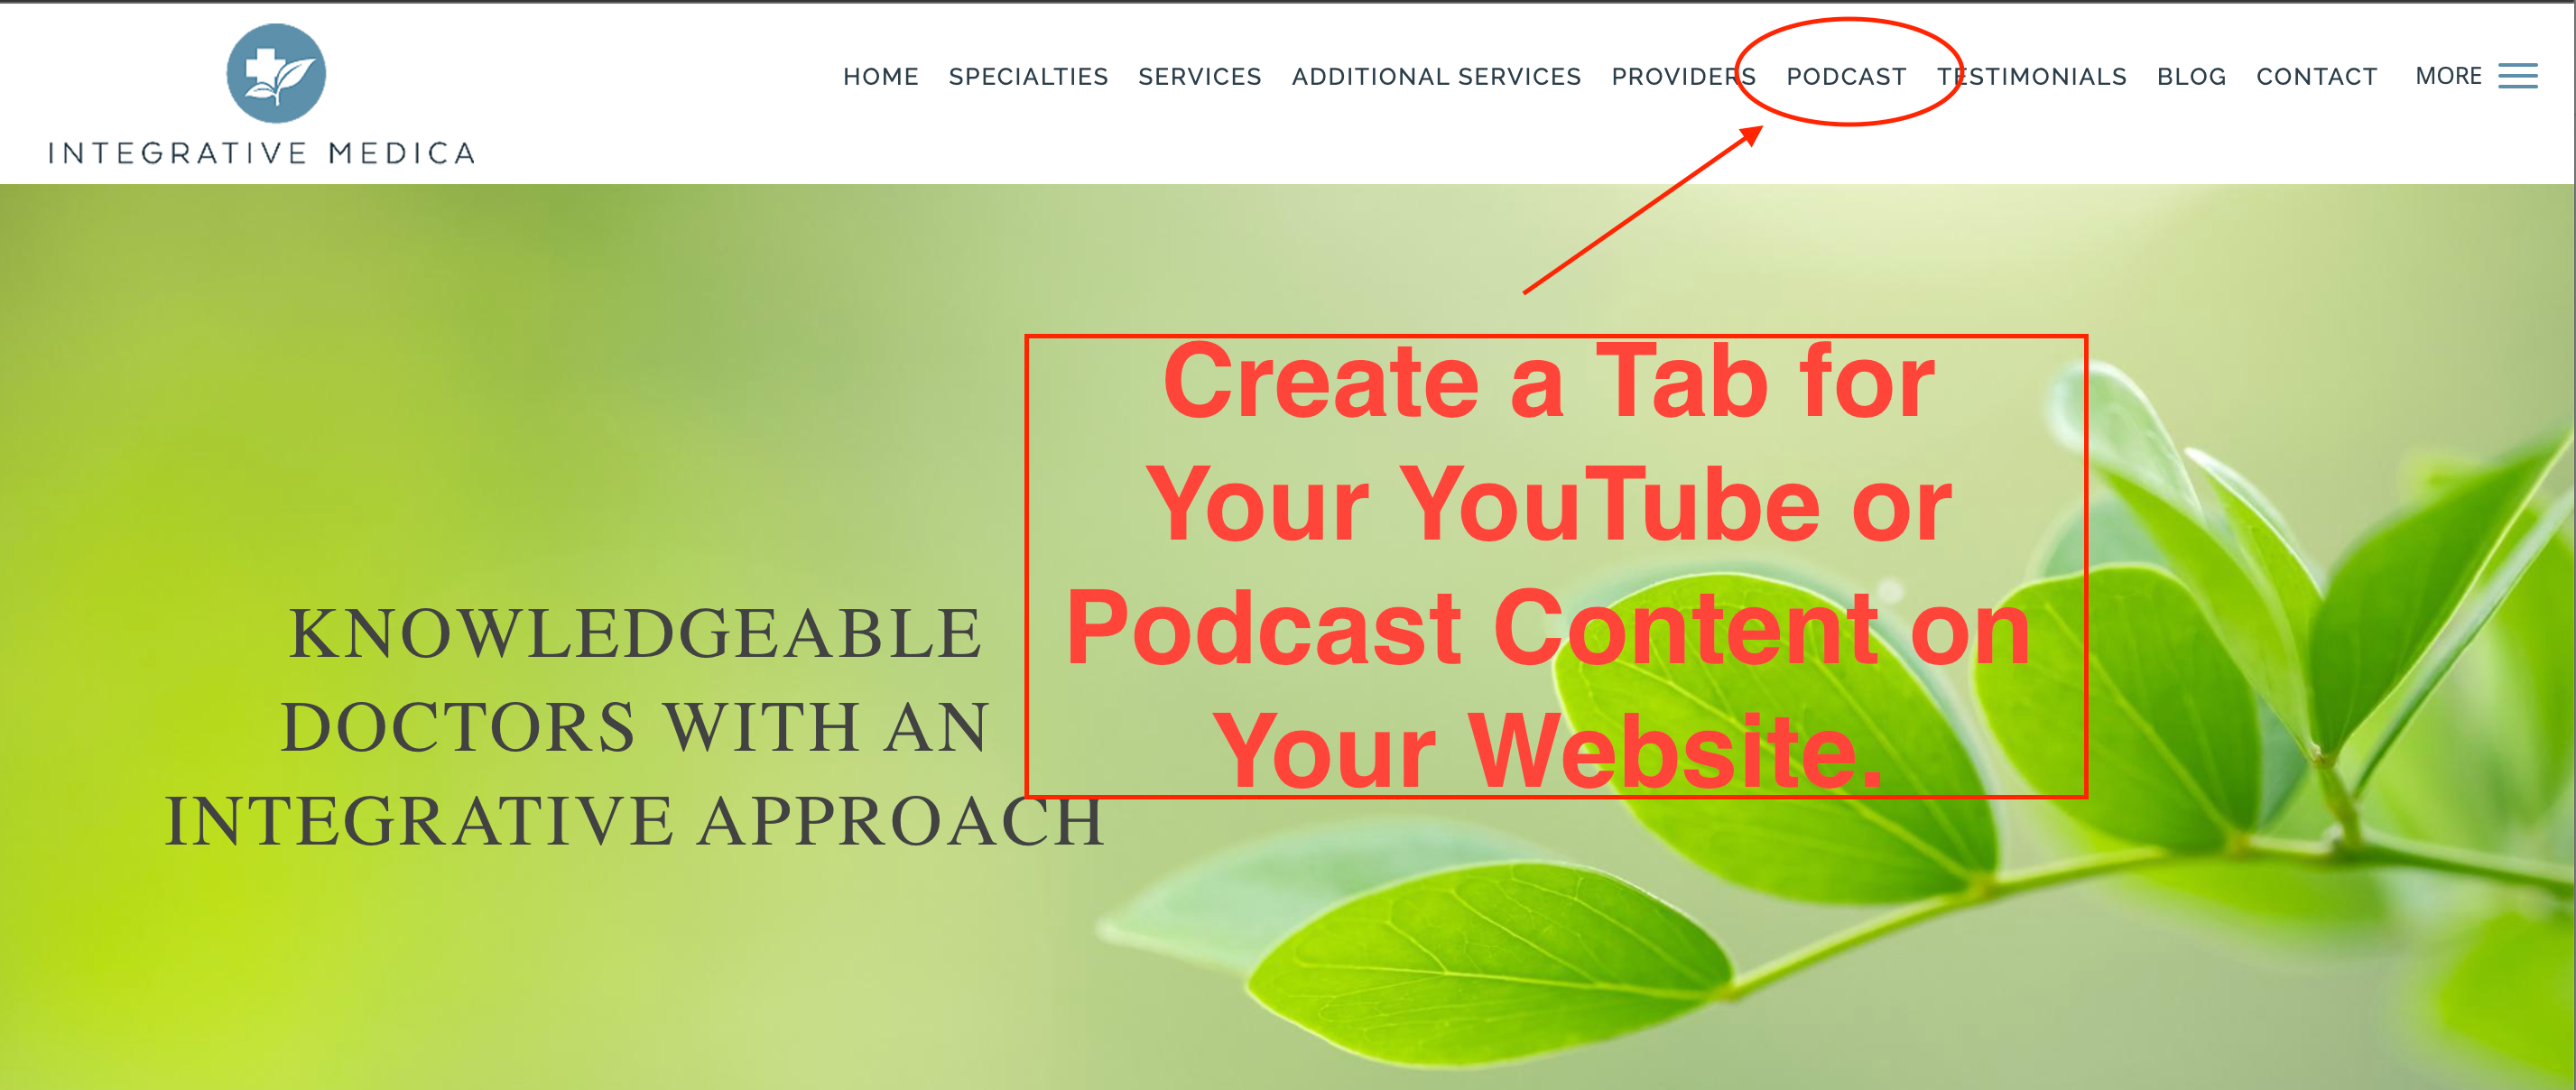 digital marketing for doctos embeding podcast to website